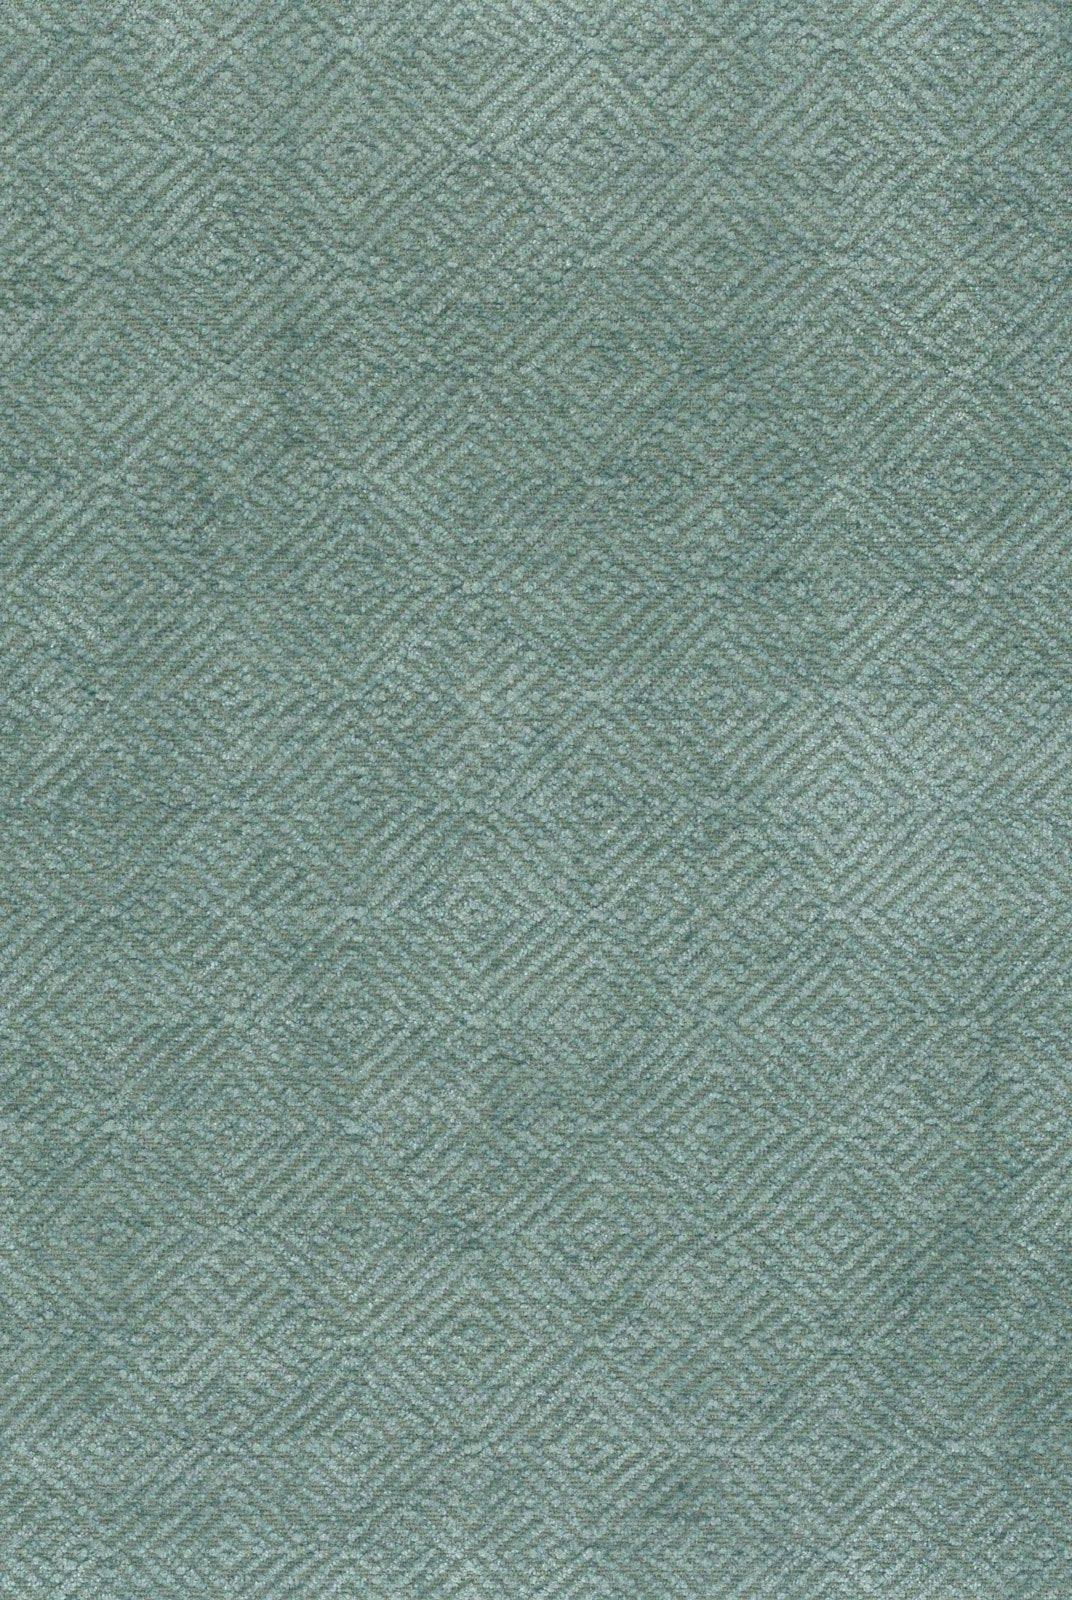 Nina Campbell Fabric - Cathay Weaves Zhi Aqua NCF4161-01